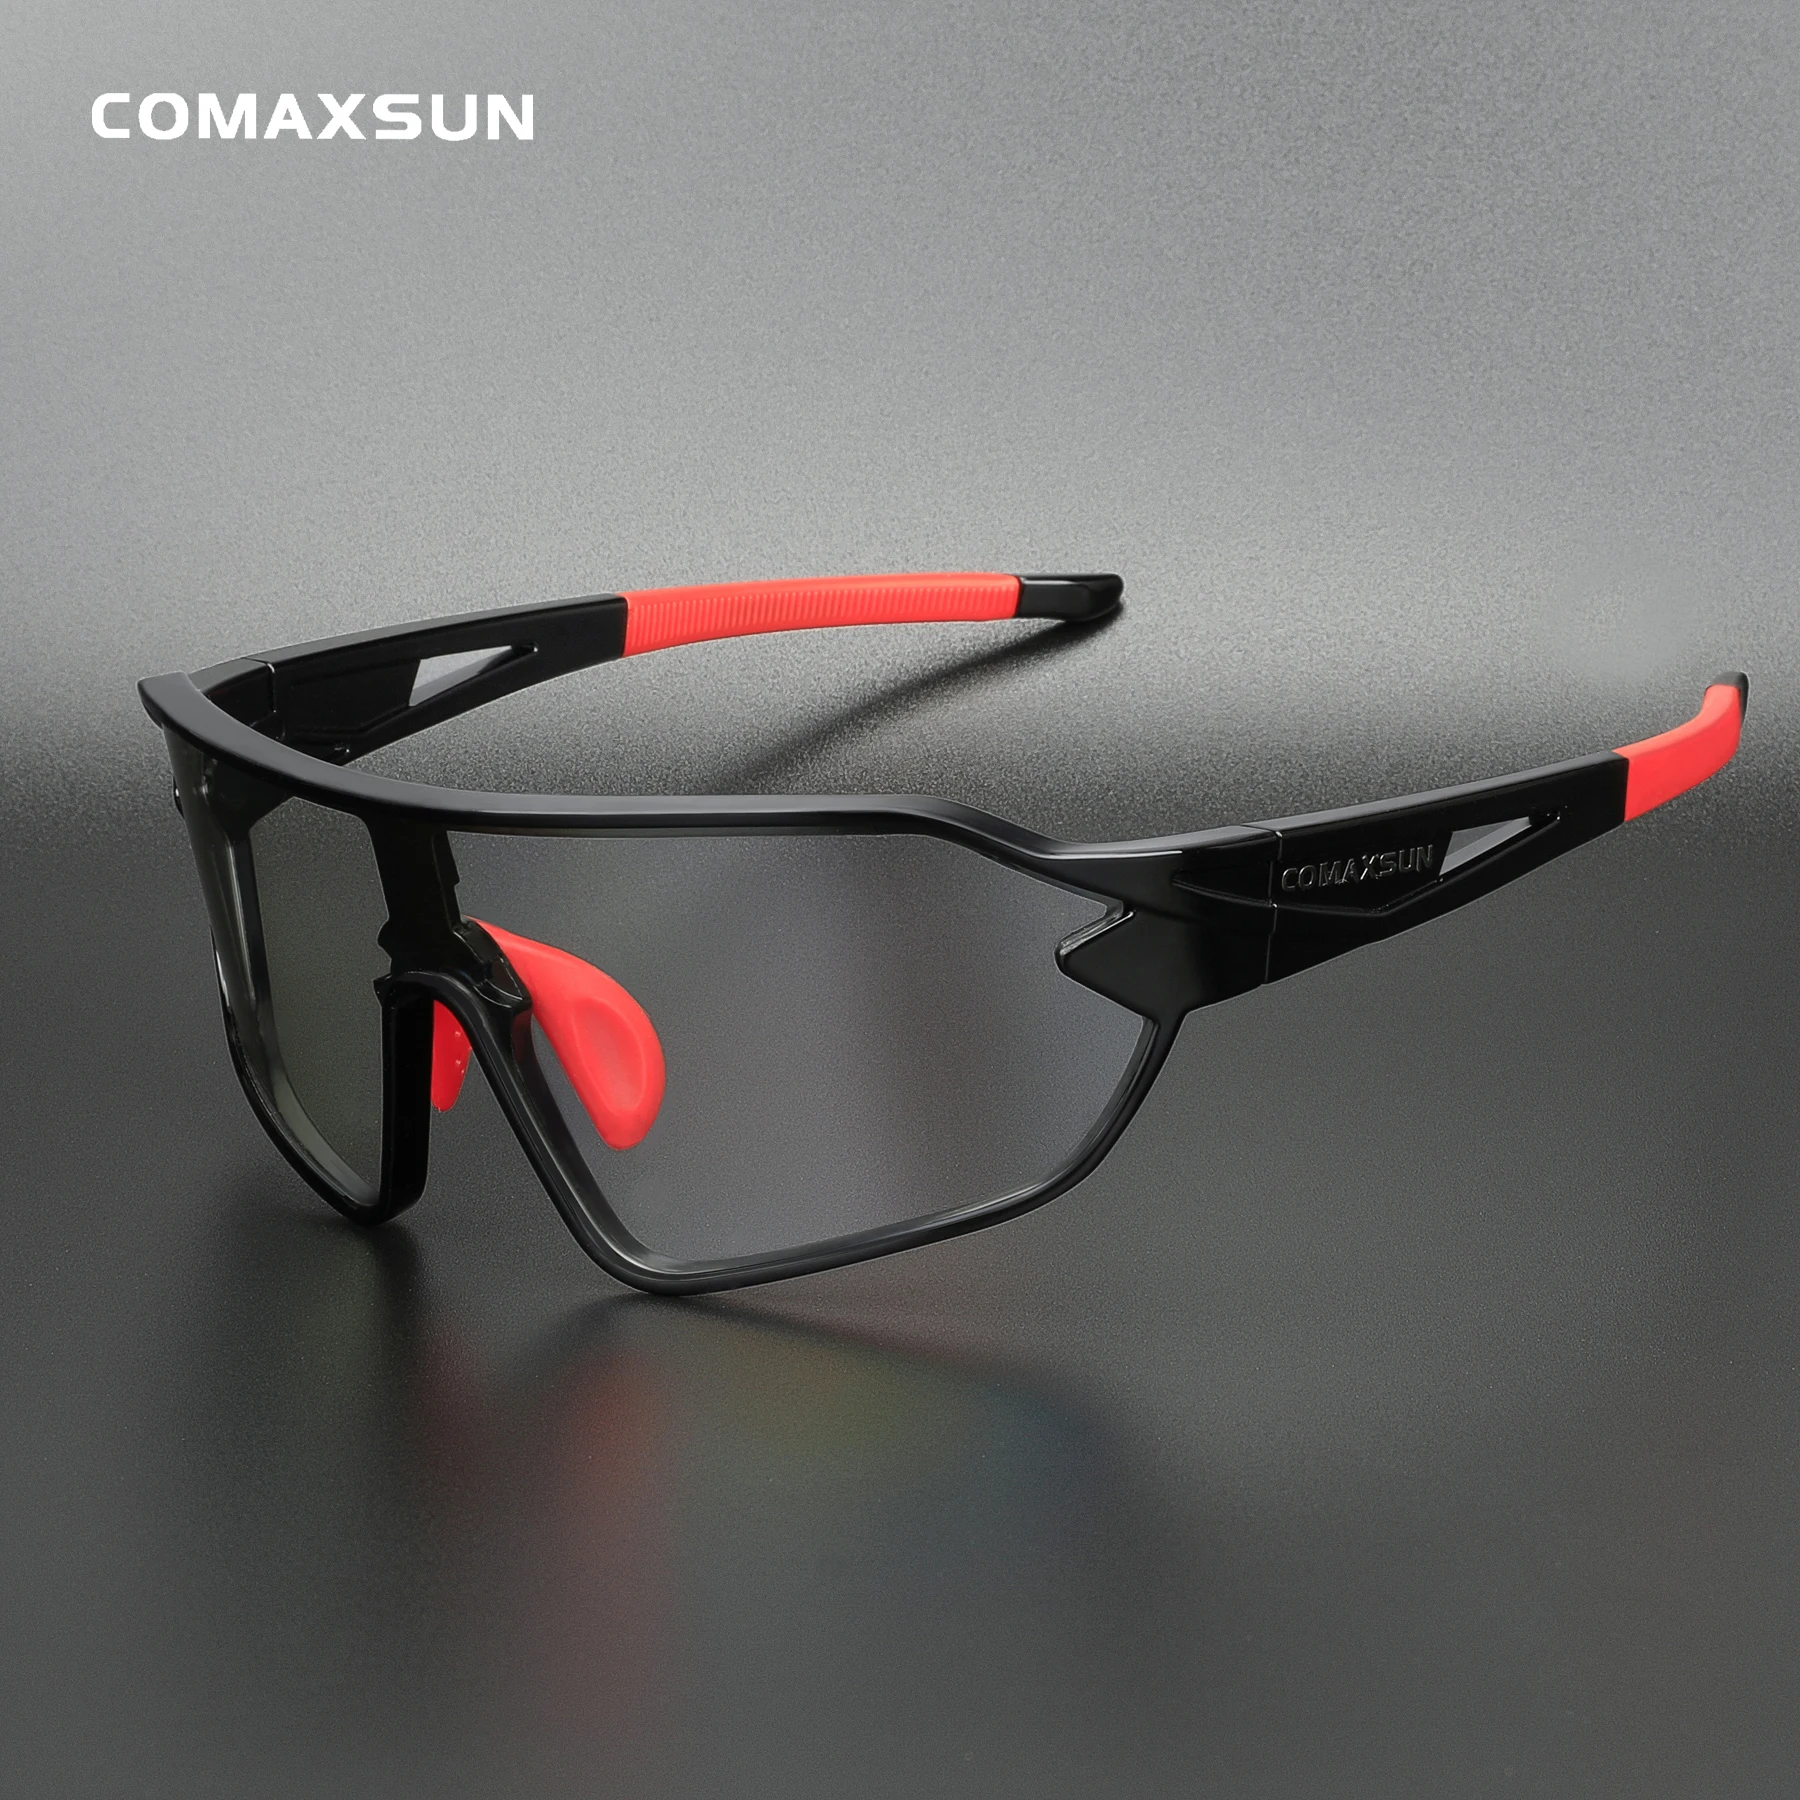 Comaxsun Photochromic Cycling Glasses Discoloration Road Bike Sport 